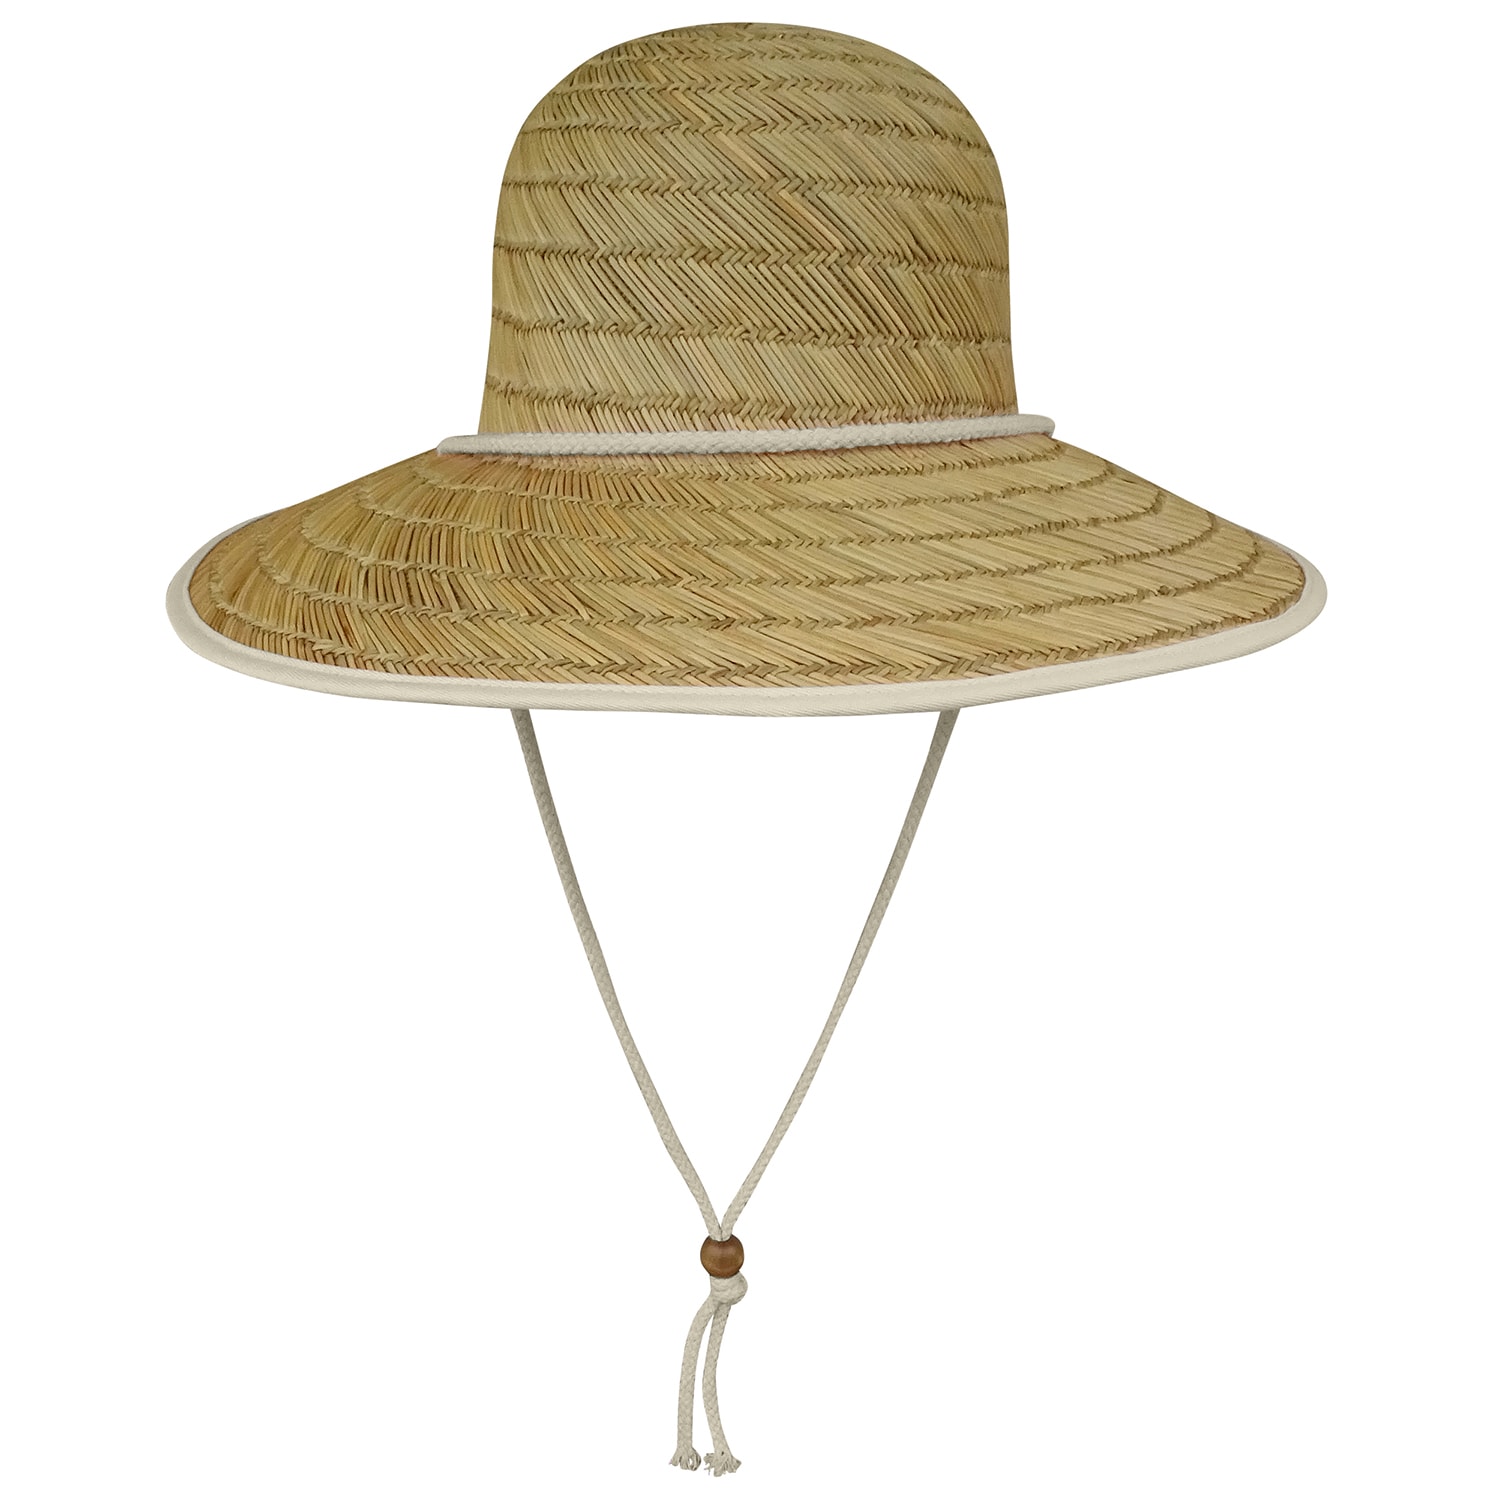 Infinity Brands Women's Natural Straw Wide-brim Hat (Small/Medium